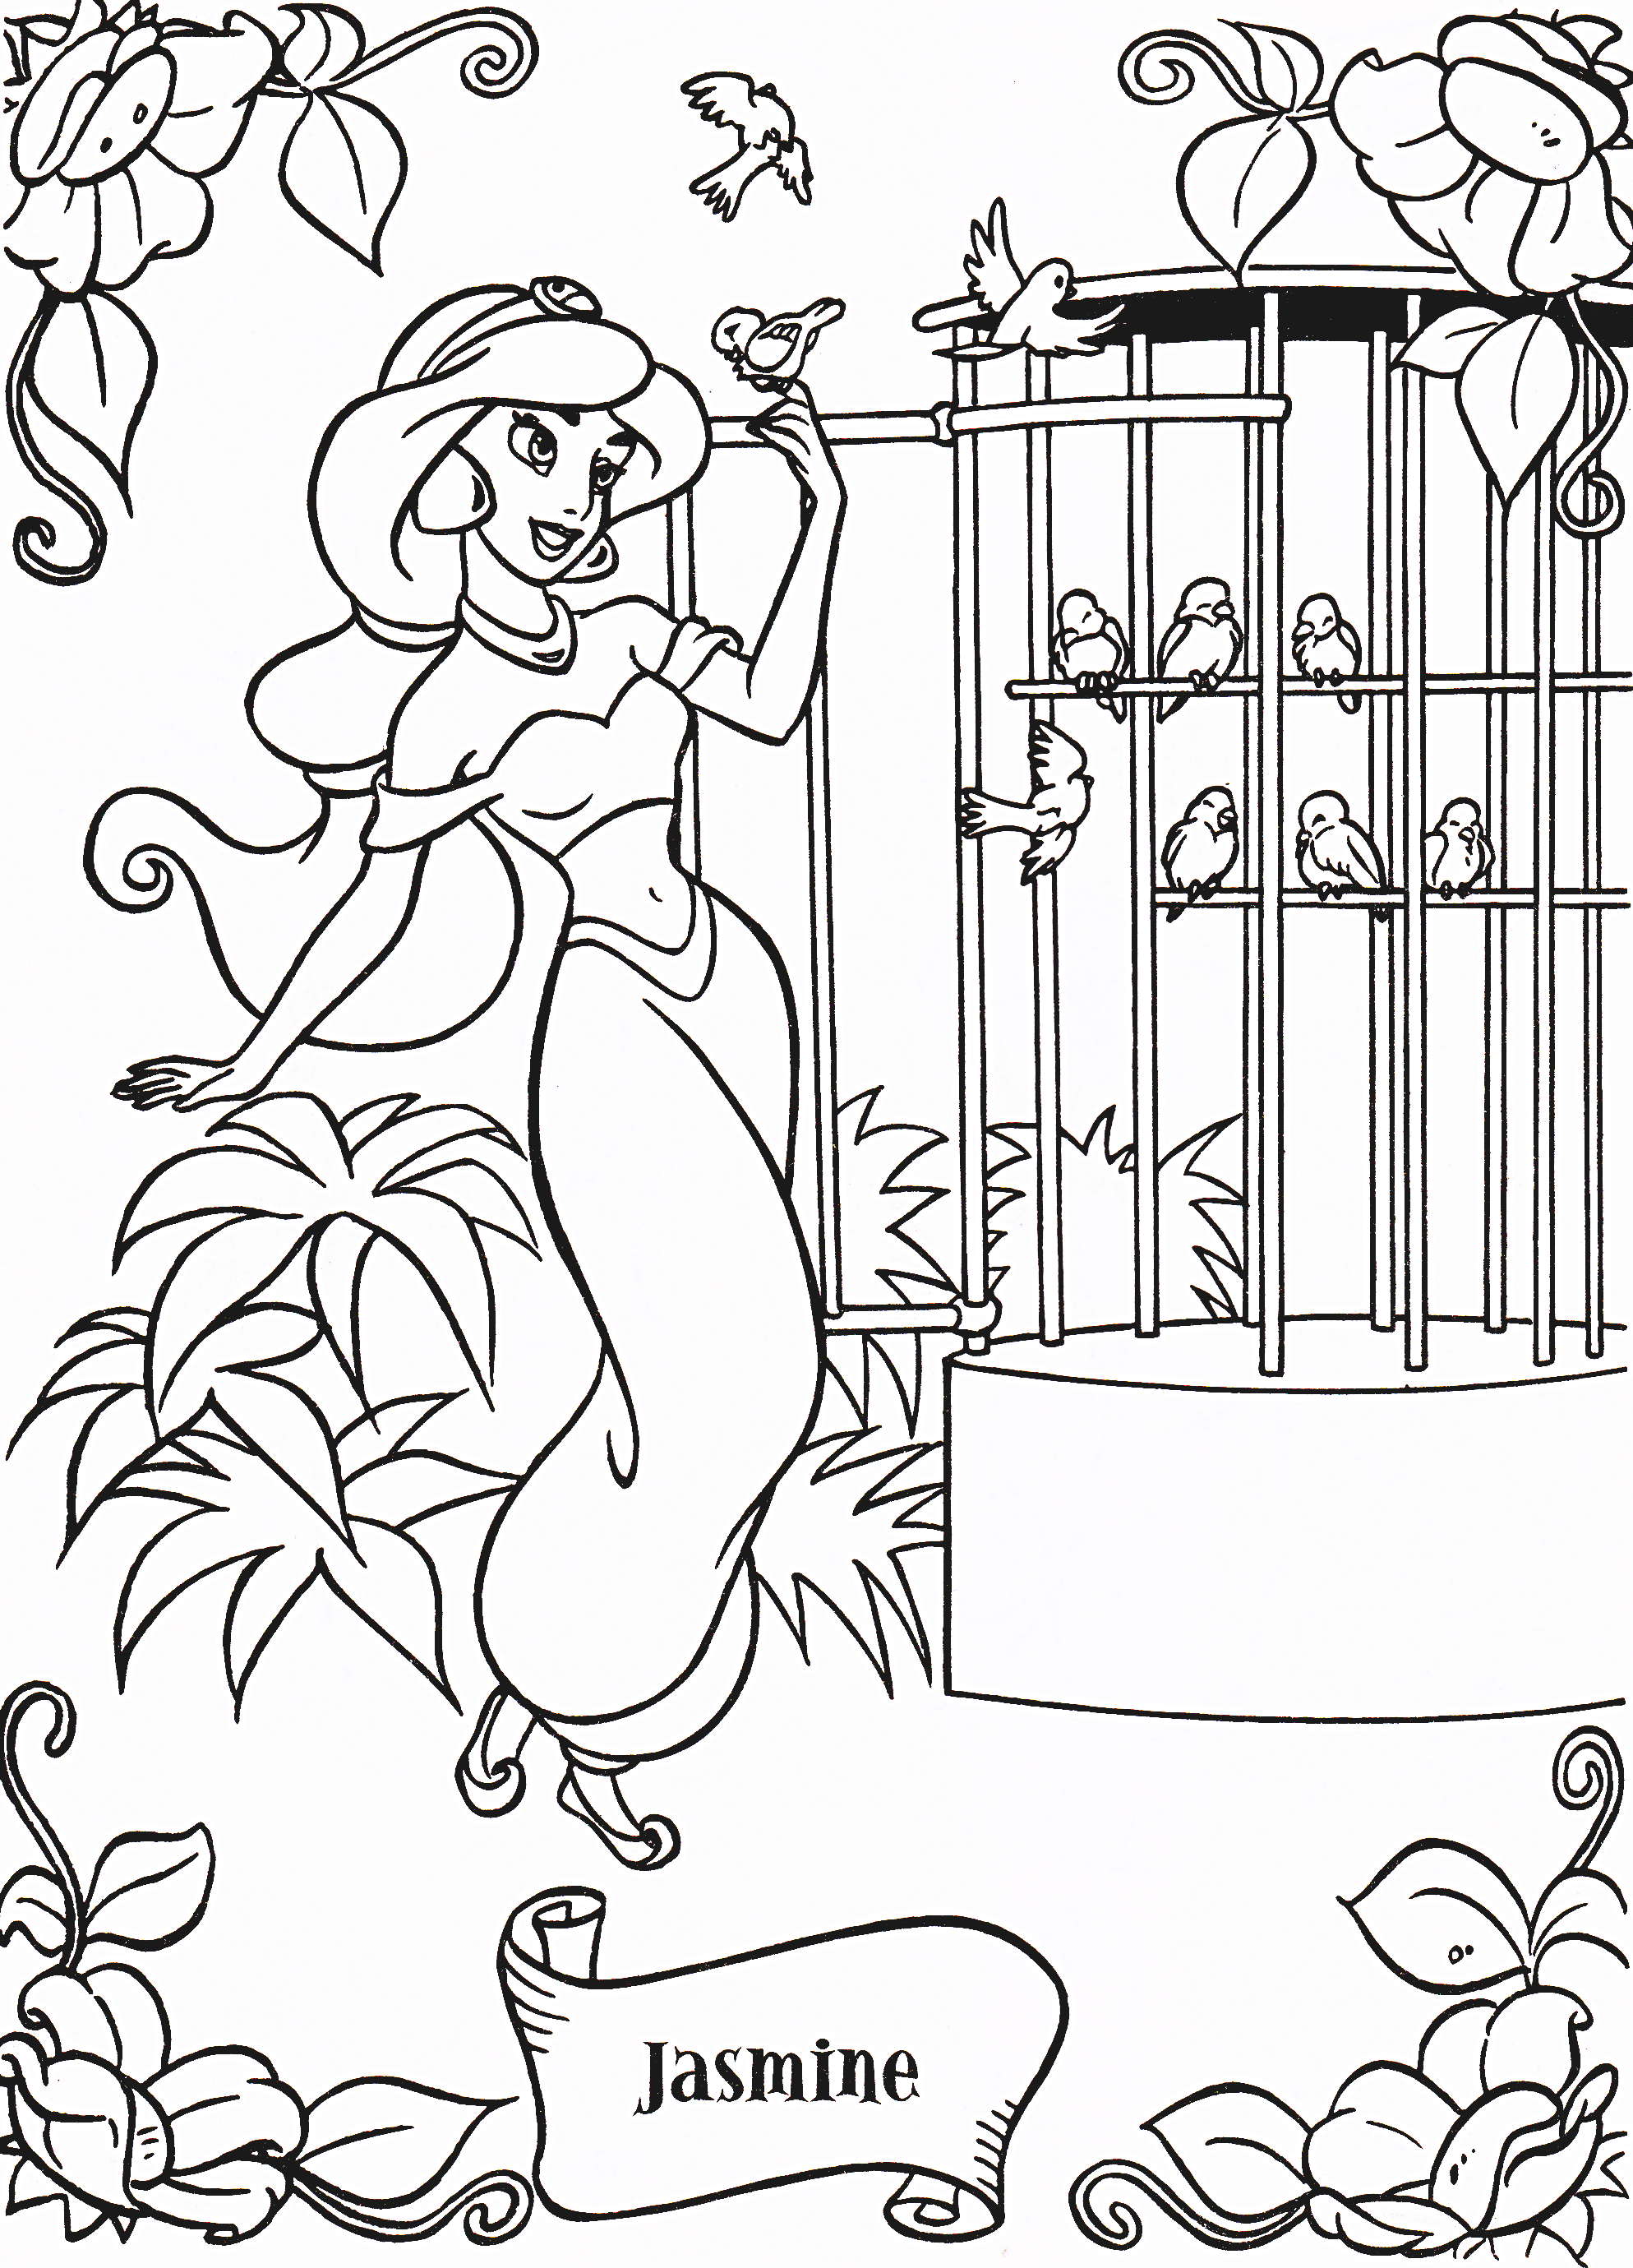 Walt Disney Coloring Pages - Princess Jasmine - Walt Disney Characters